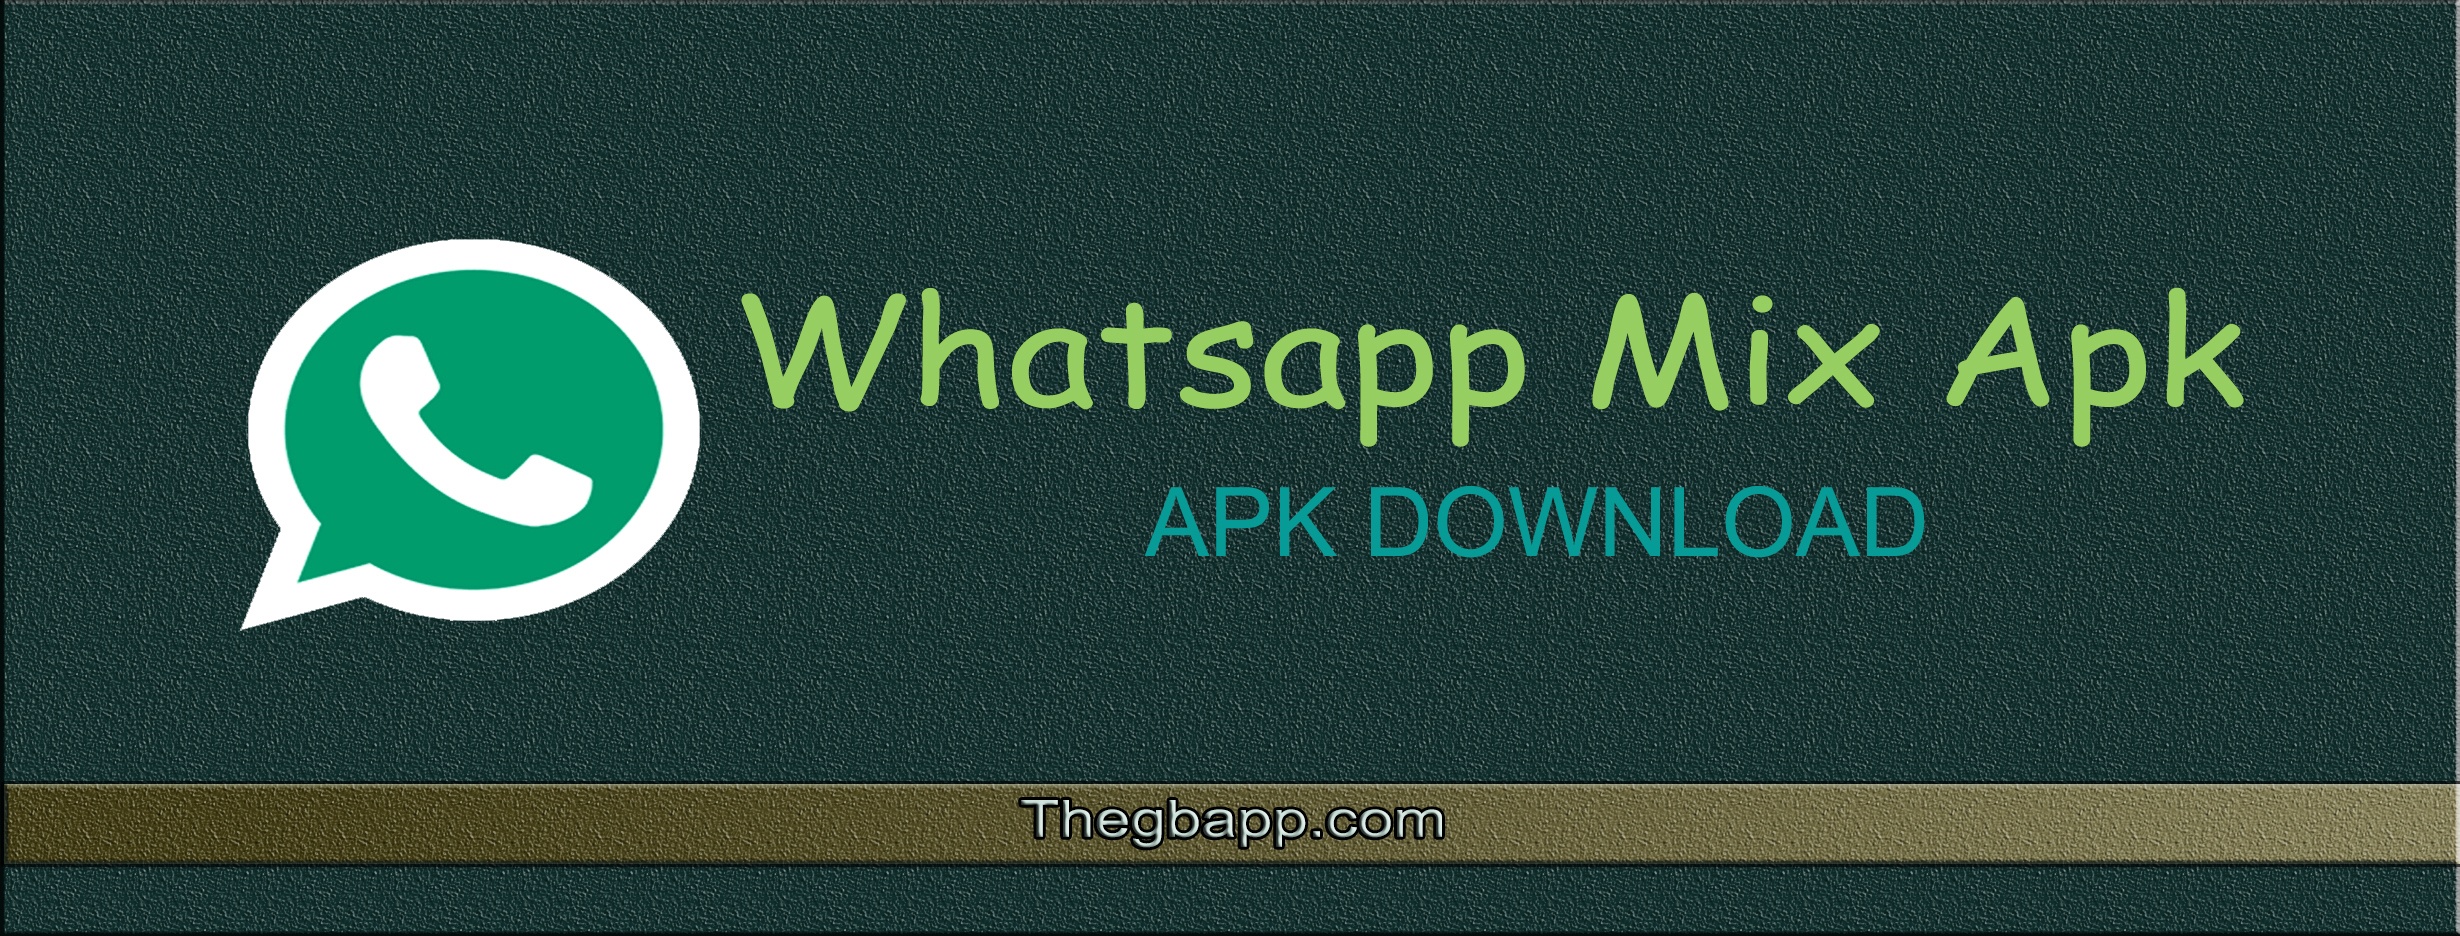 Whatsapp Mix Apk 